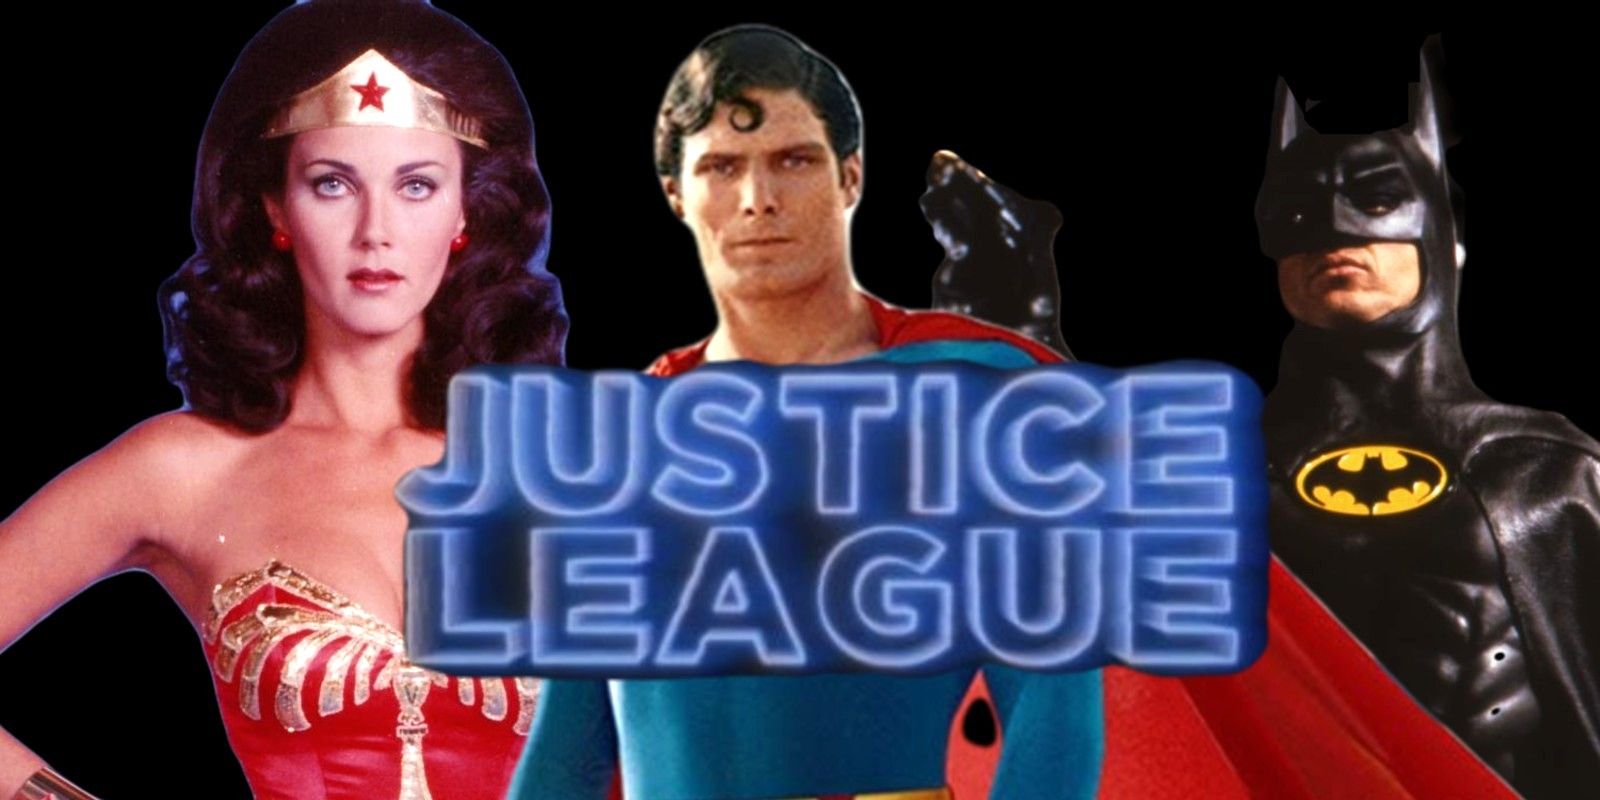 Retro Justice League trailer united Lynda Carter Cristopher Reeve and Michael Keaton